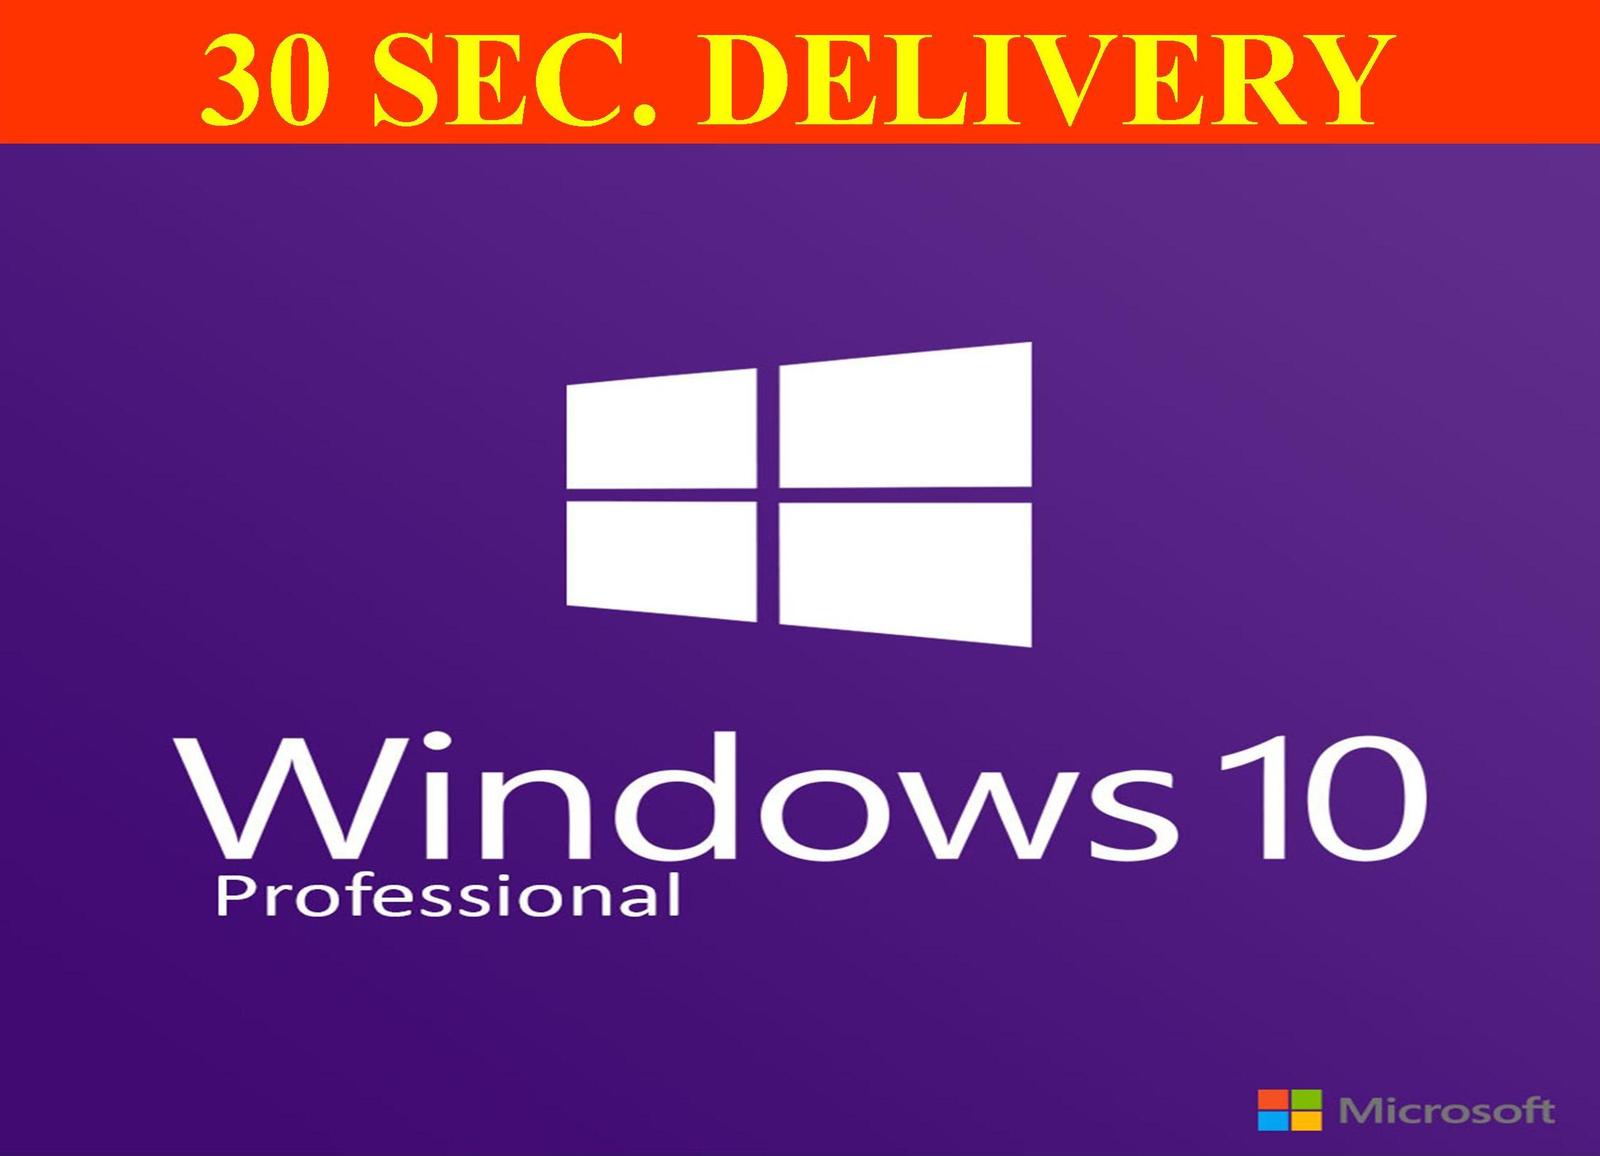 instant windows 10 pro key